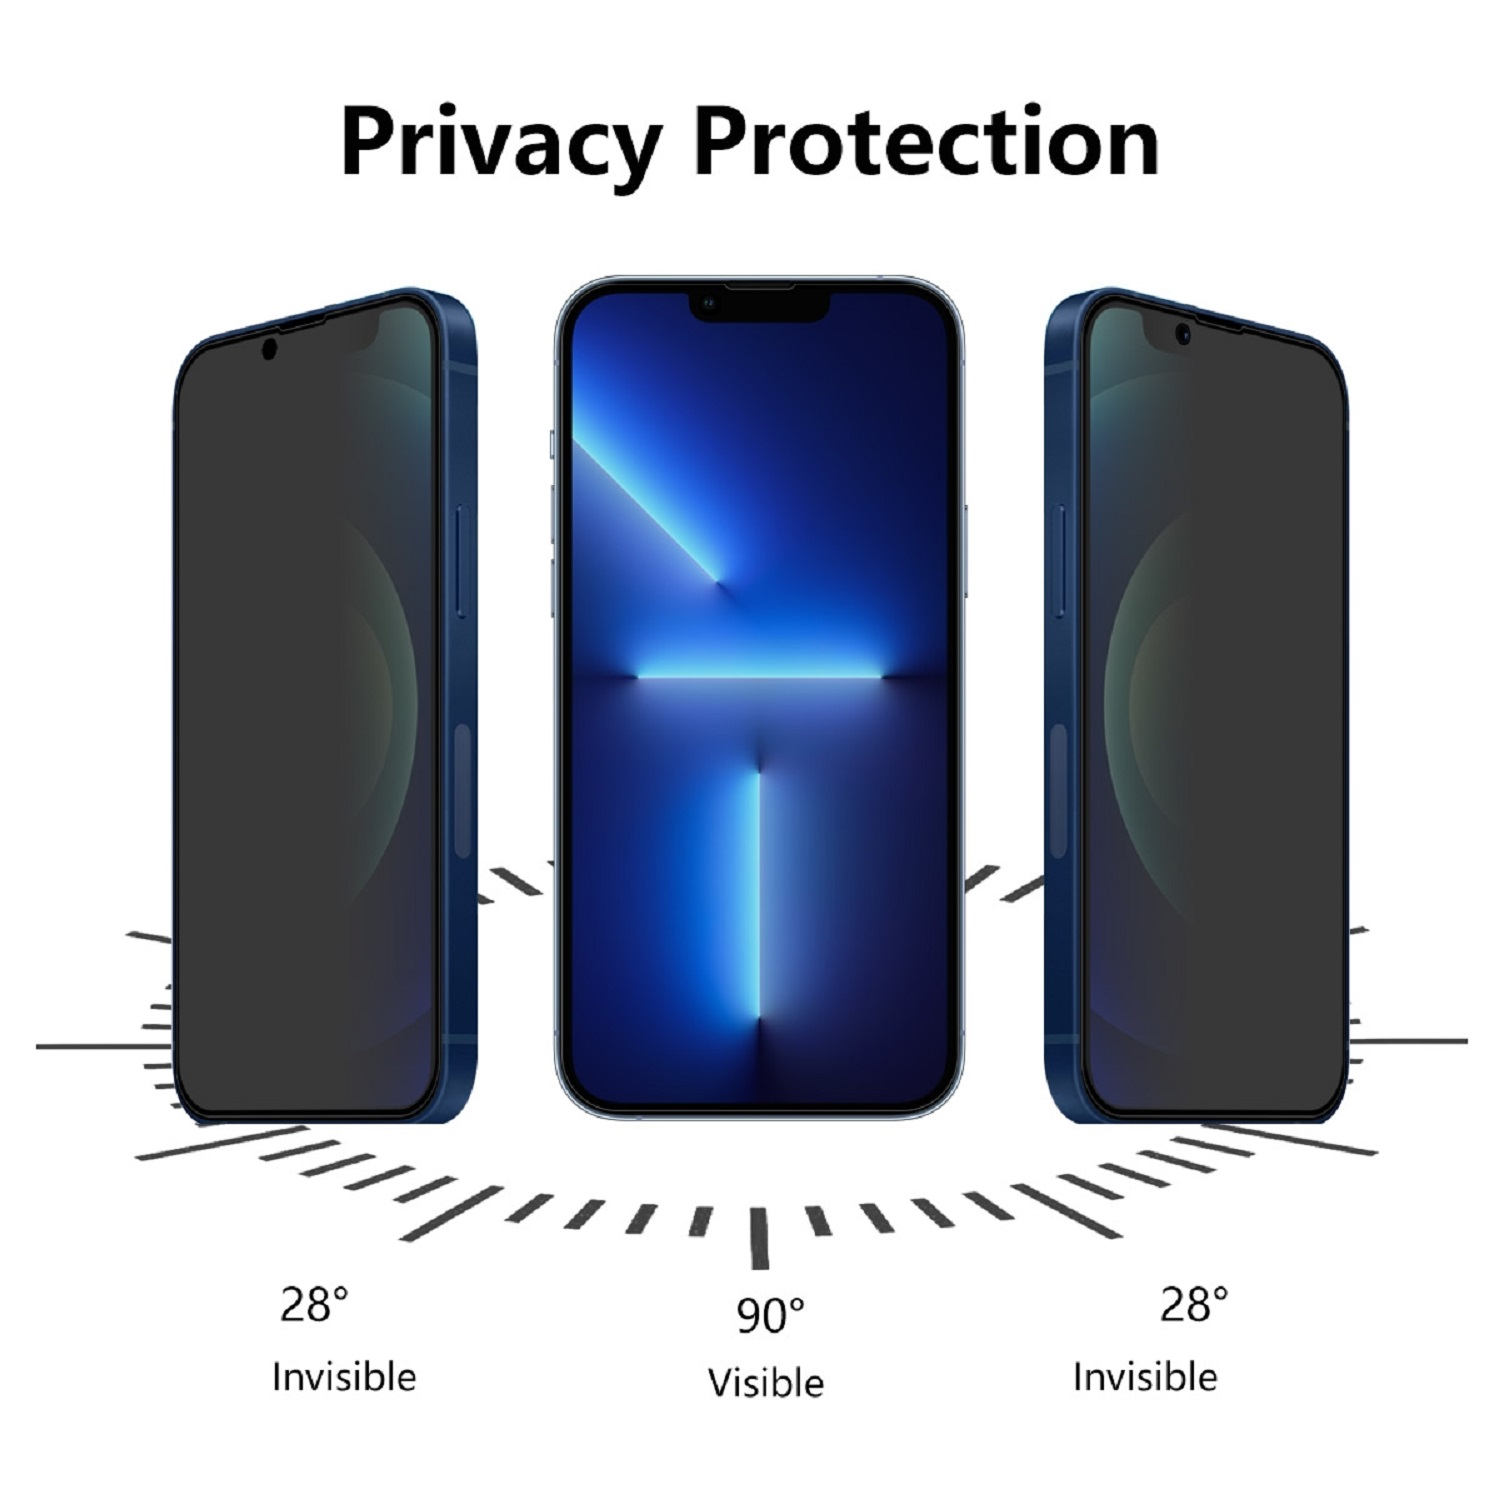 Displayschutzfolie(für Pro PROTECTORKING 2x iPhone 9H Apple Max) Privacy COVER 13 Schutzglas ANTI-SPY FULL